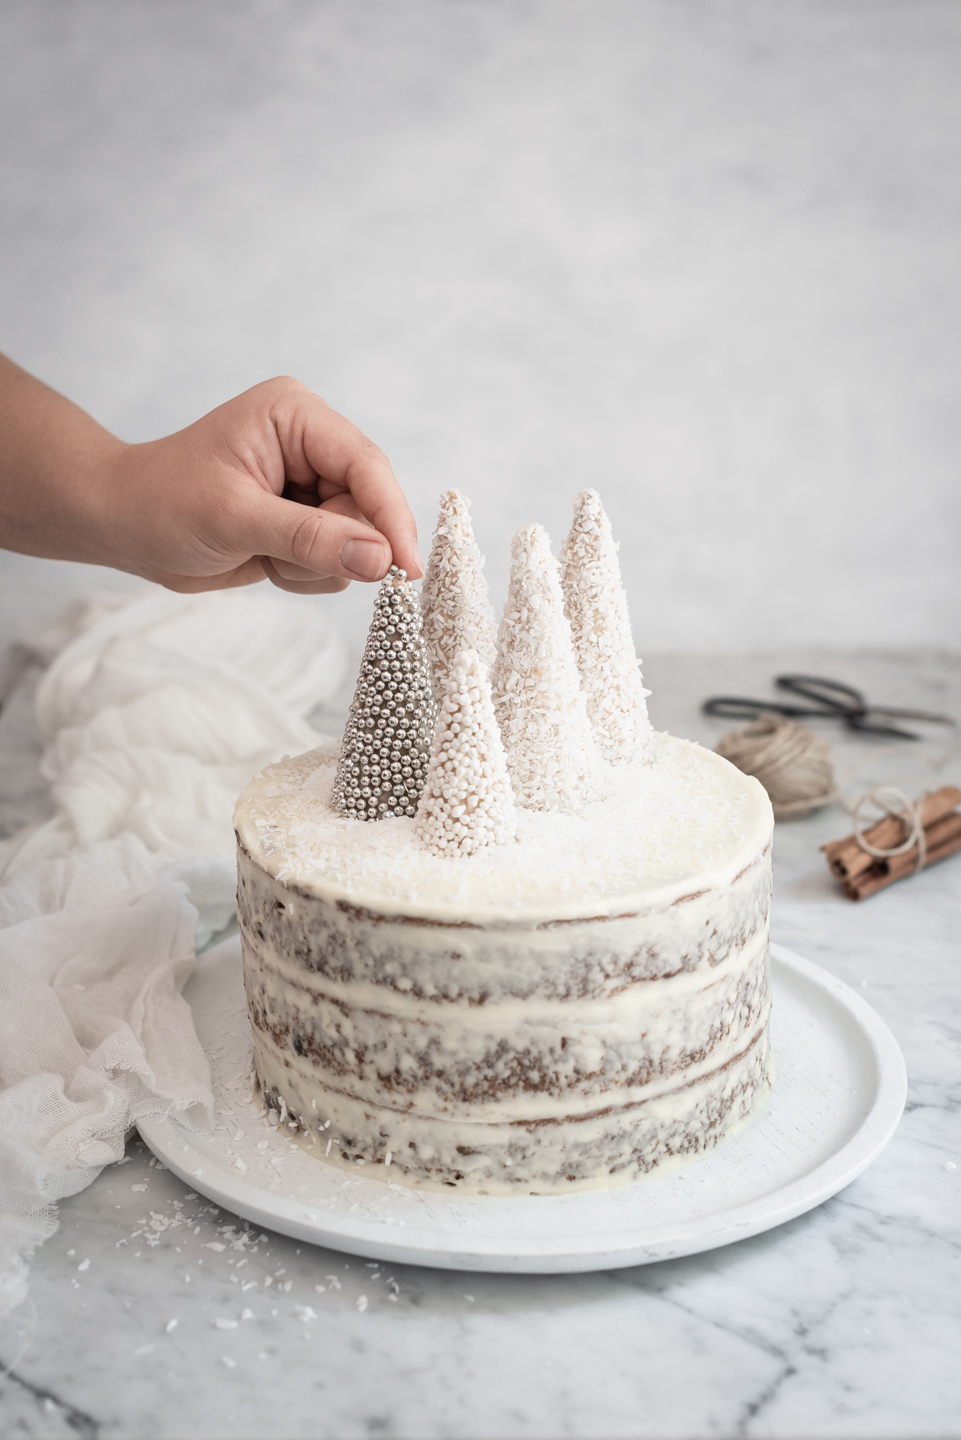 Christmas Tree Cake - Preppy Kitchen